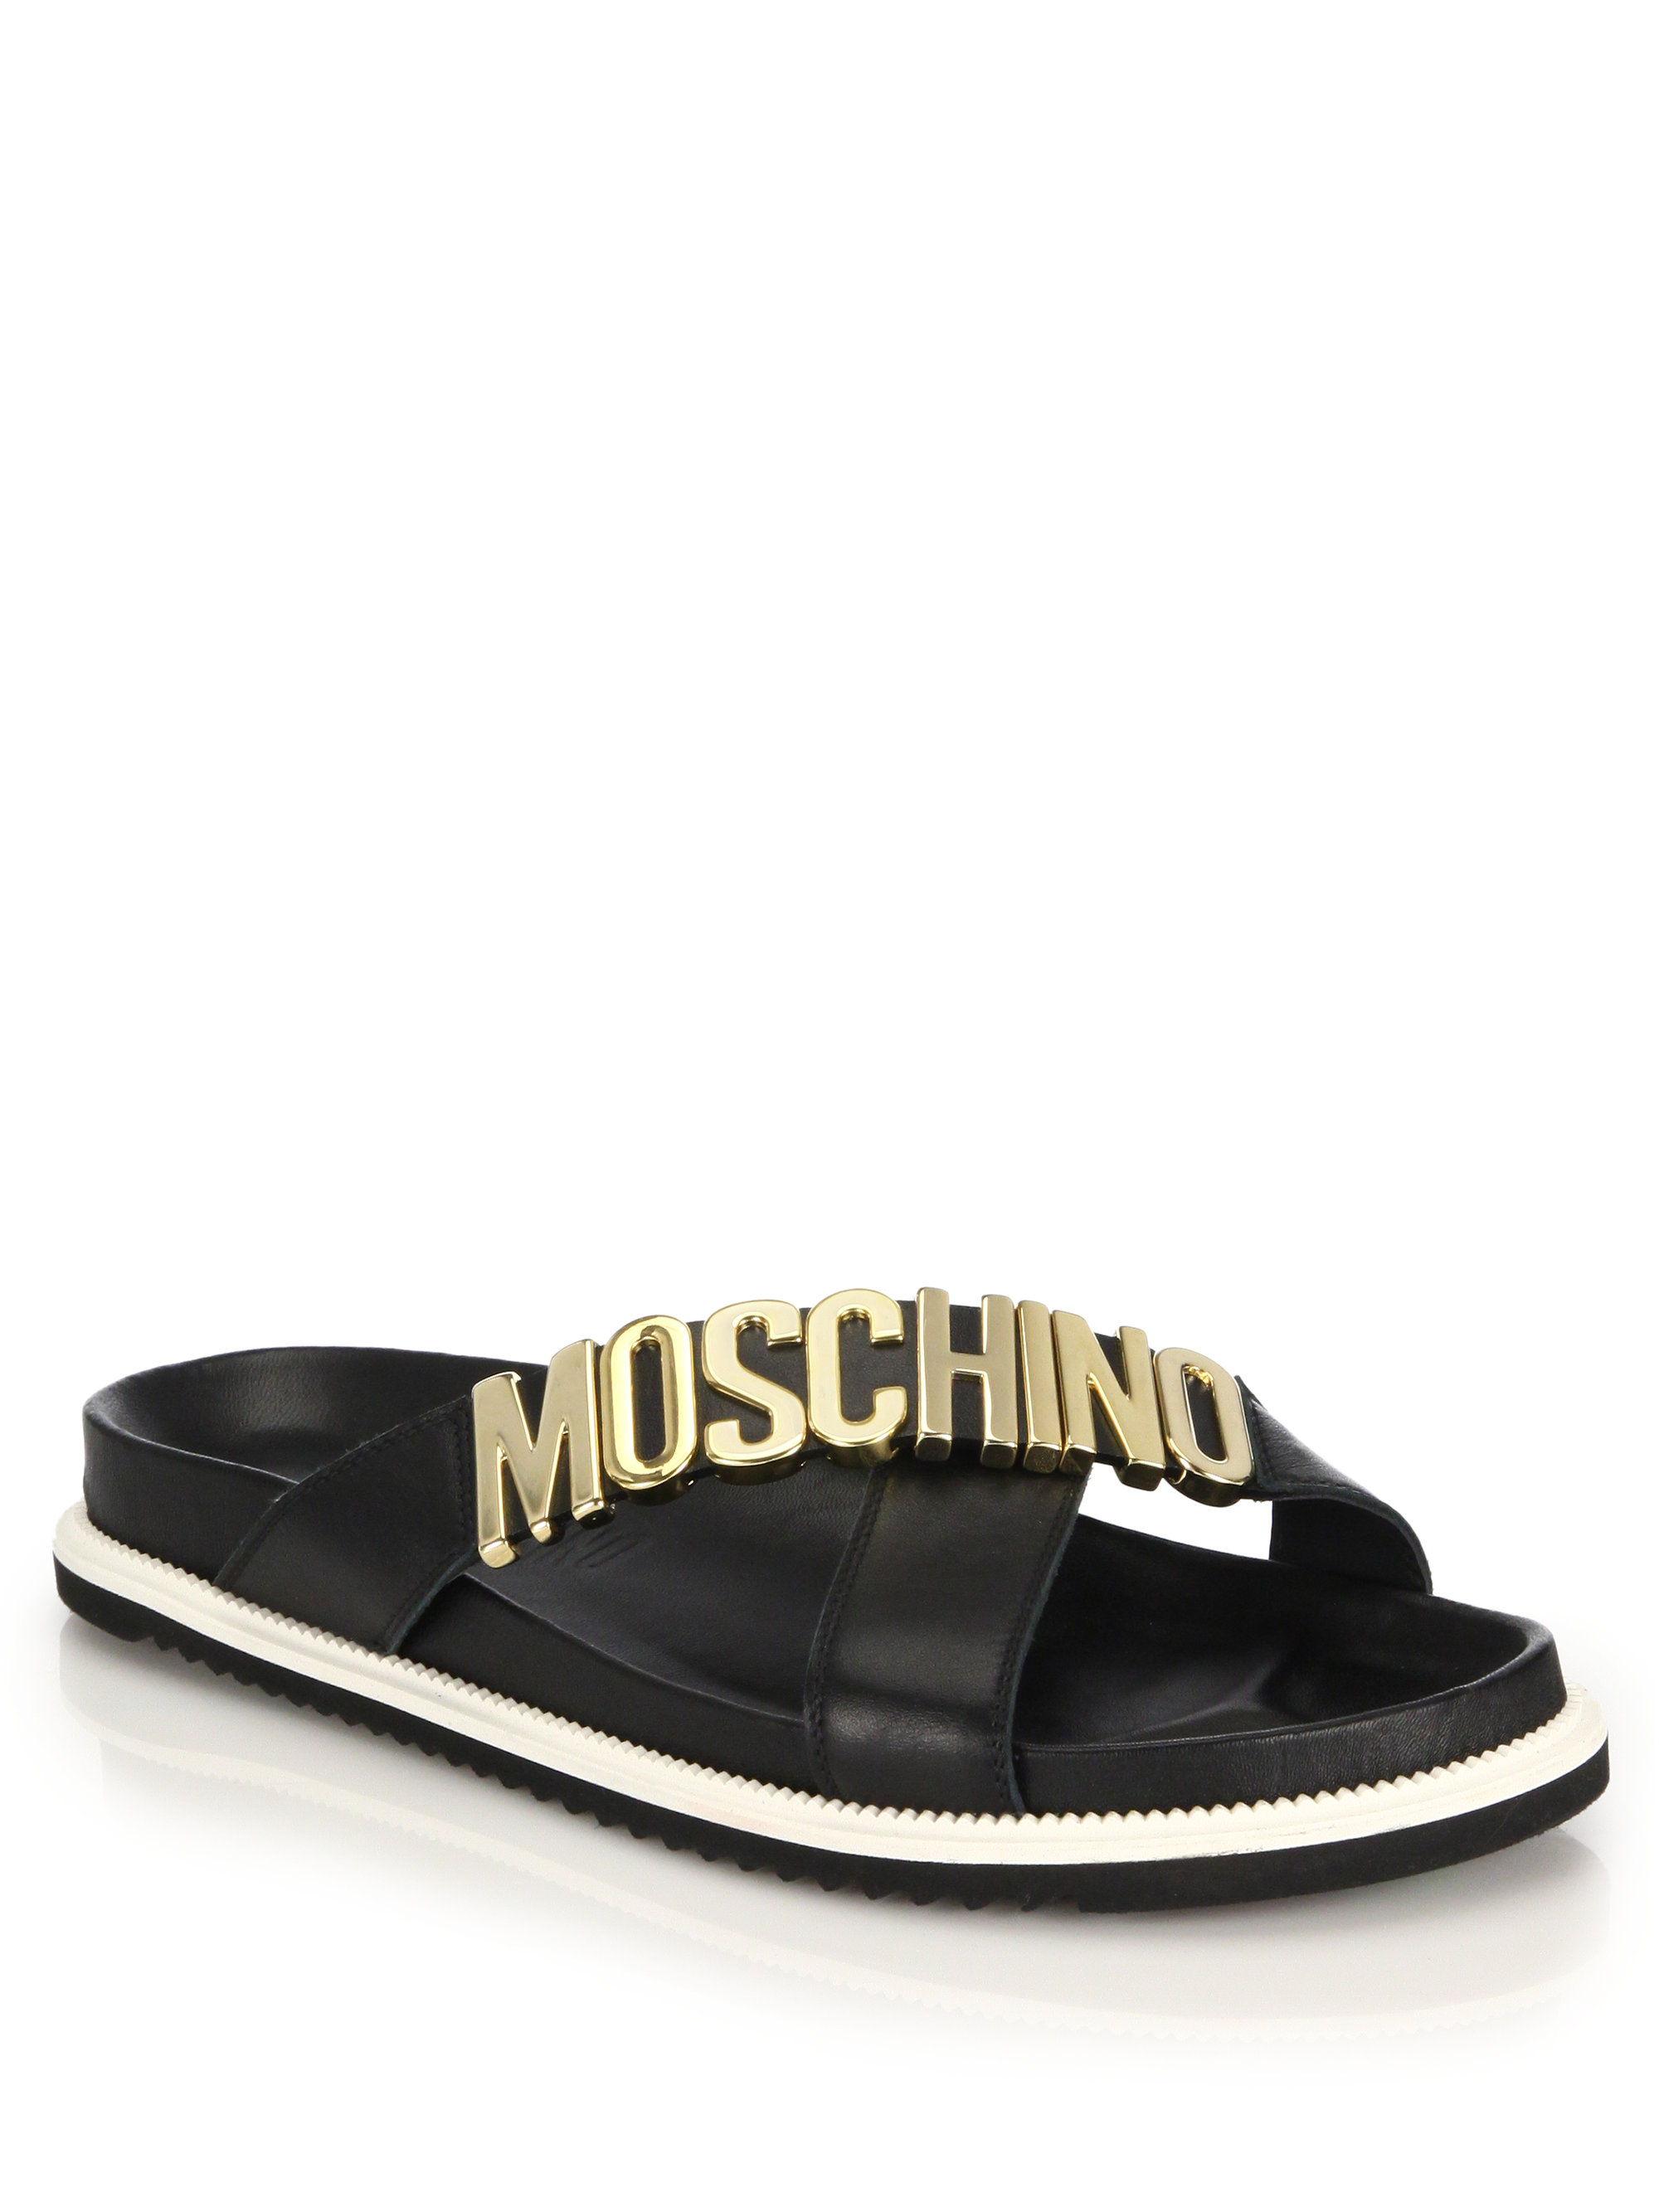 Moschino Logo Cross-strap Sandals in Black | Lyst